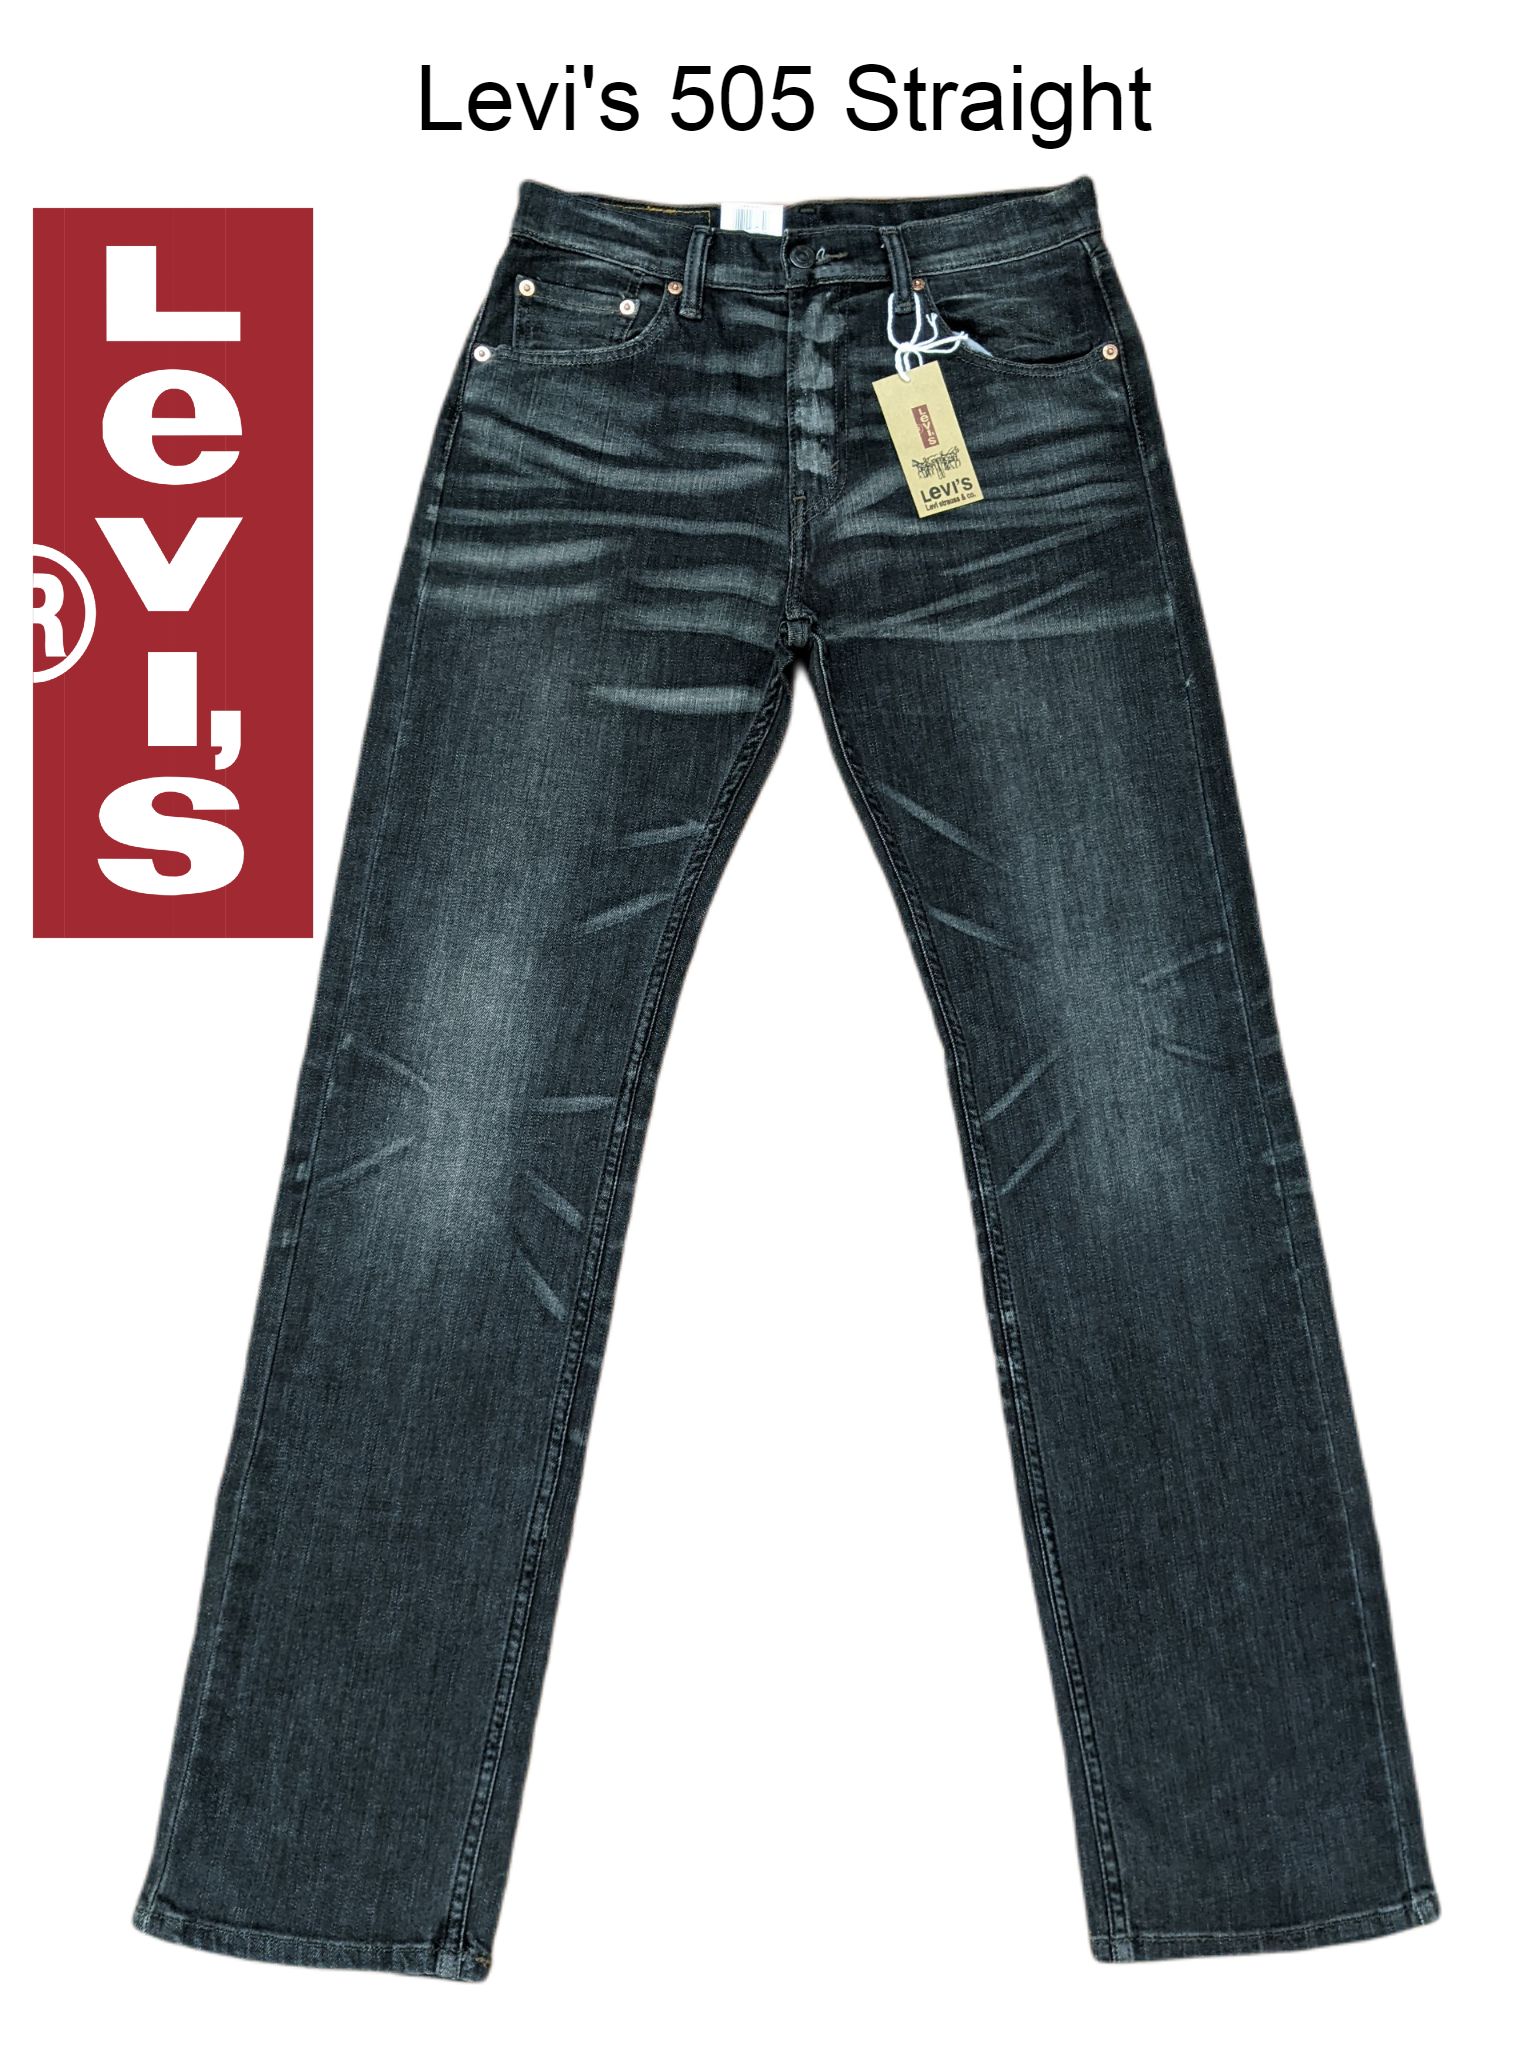 Quần jeans Nam Levi's 505 Straight W30L34 Hàng Hiệu 